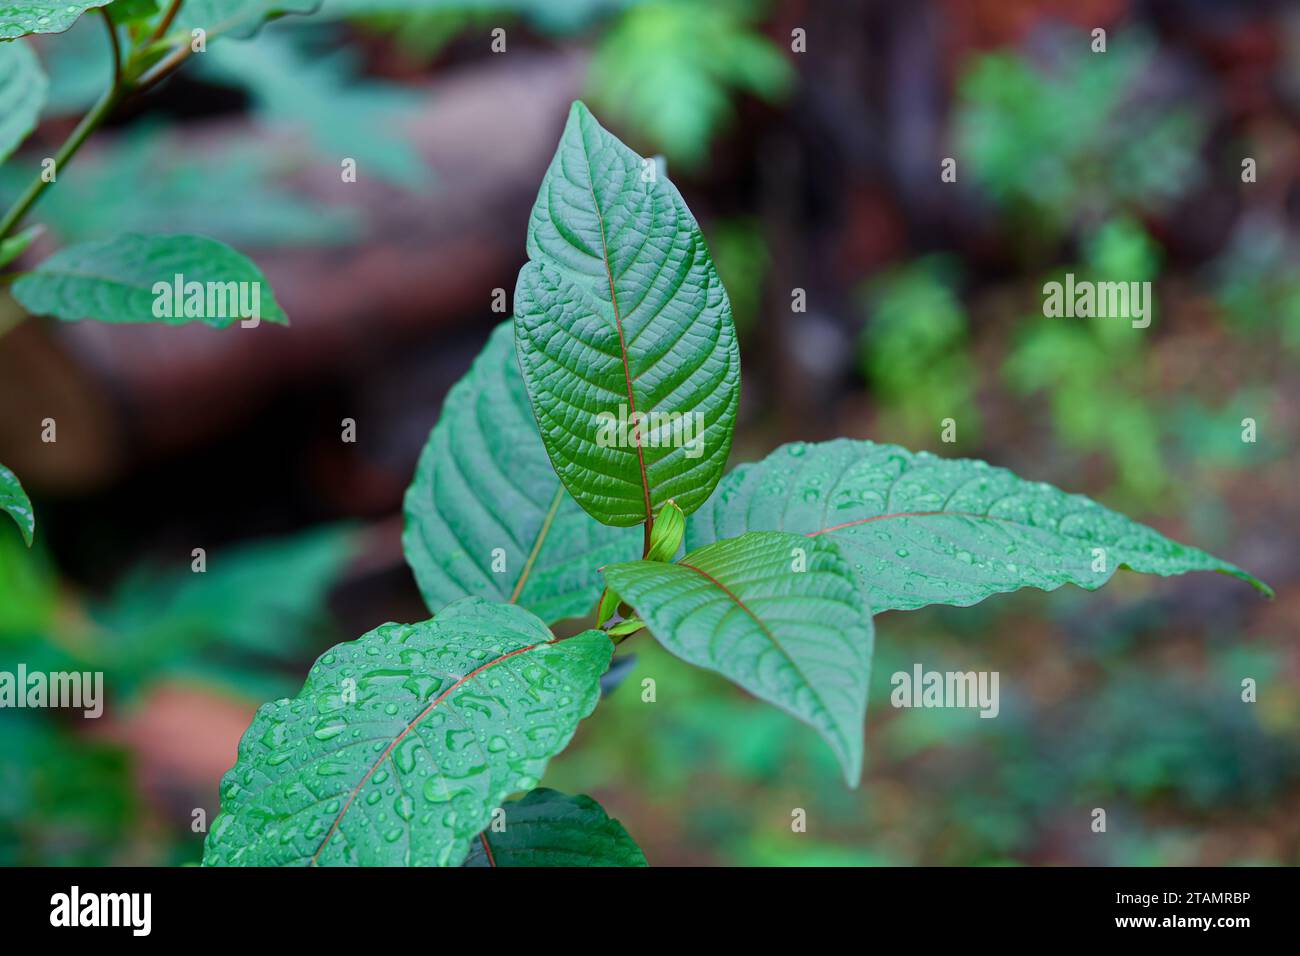 Close-up view of mitragyna speciosa or Kratom leaf Stock Photo